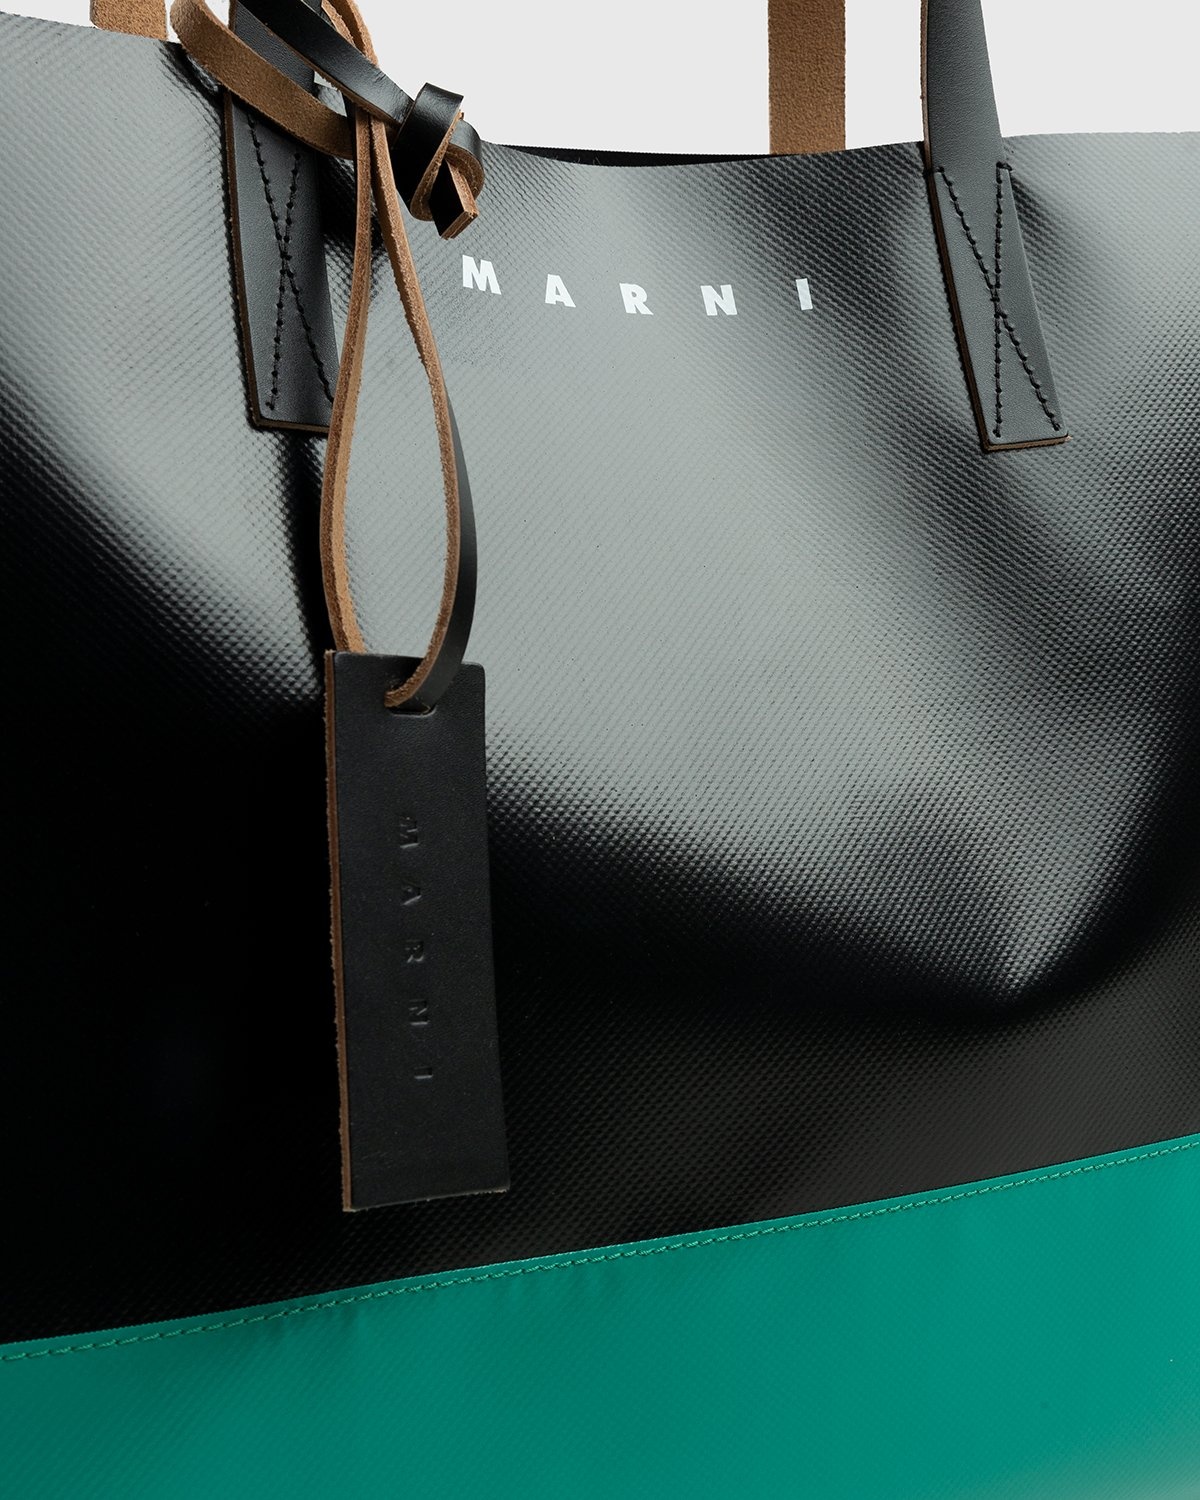 Marni – Tribeca Two-Tone Tote Bag Black/Green - Tote Bags - Black - Image 6